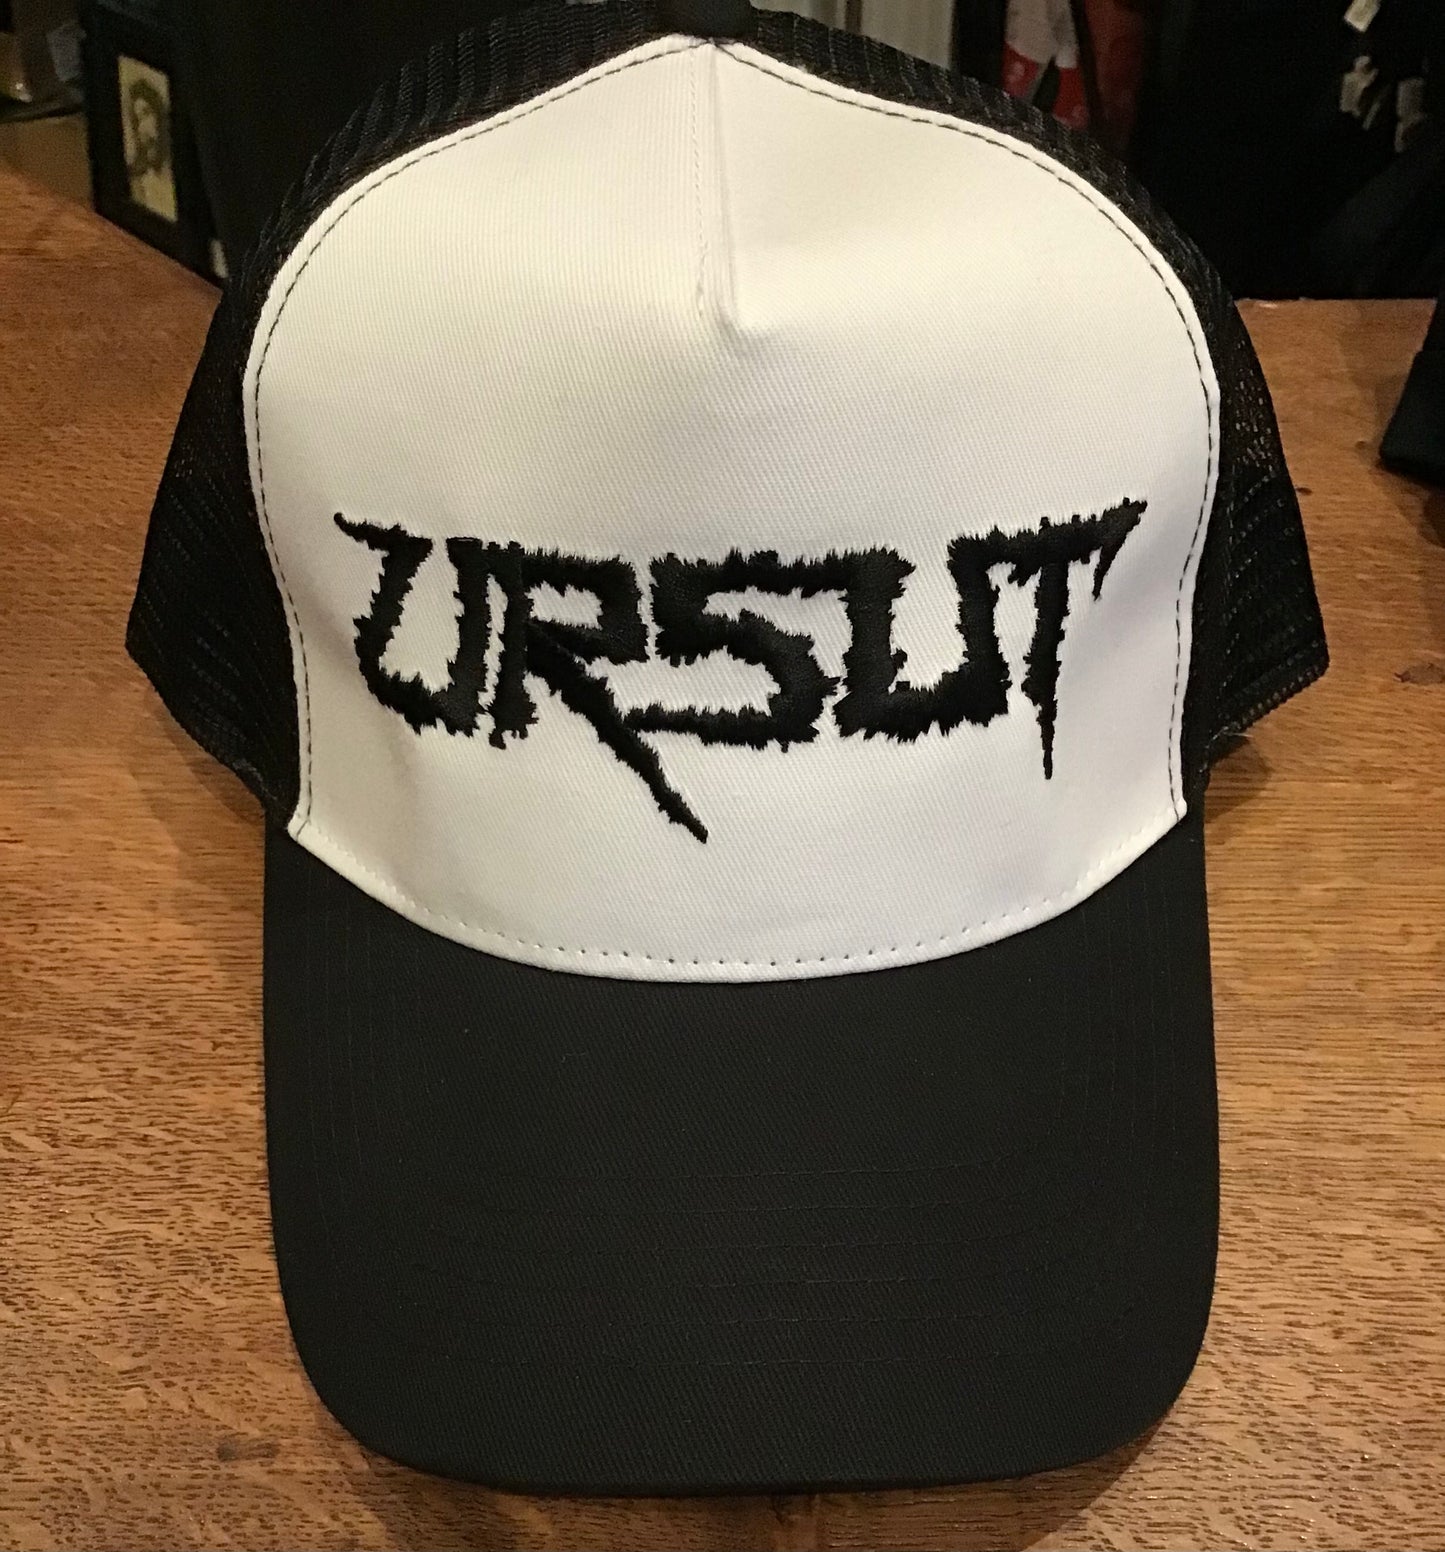 Ursut Trucker Cap white by Insane//Phobia embroidery